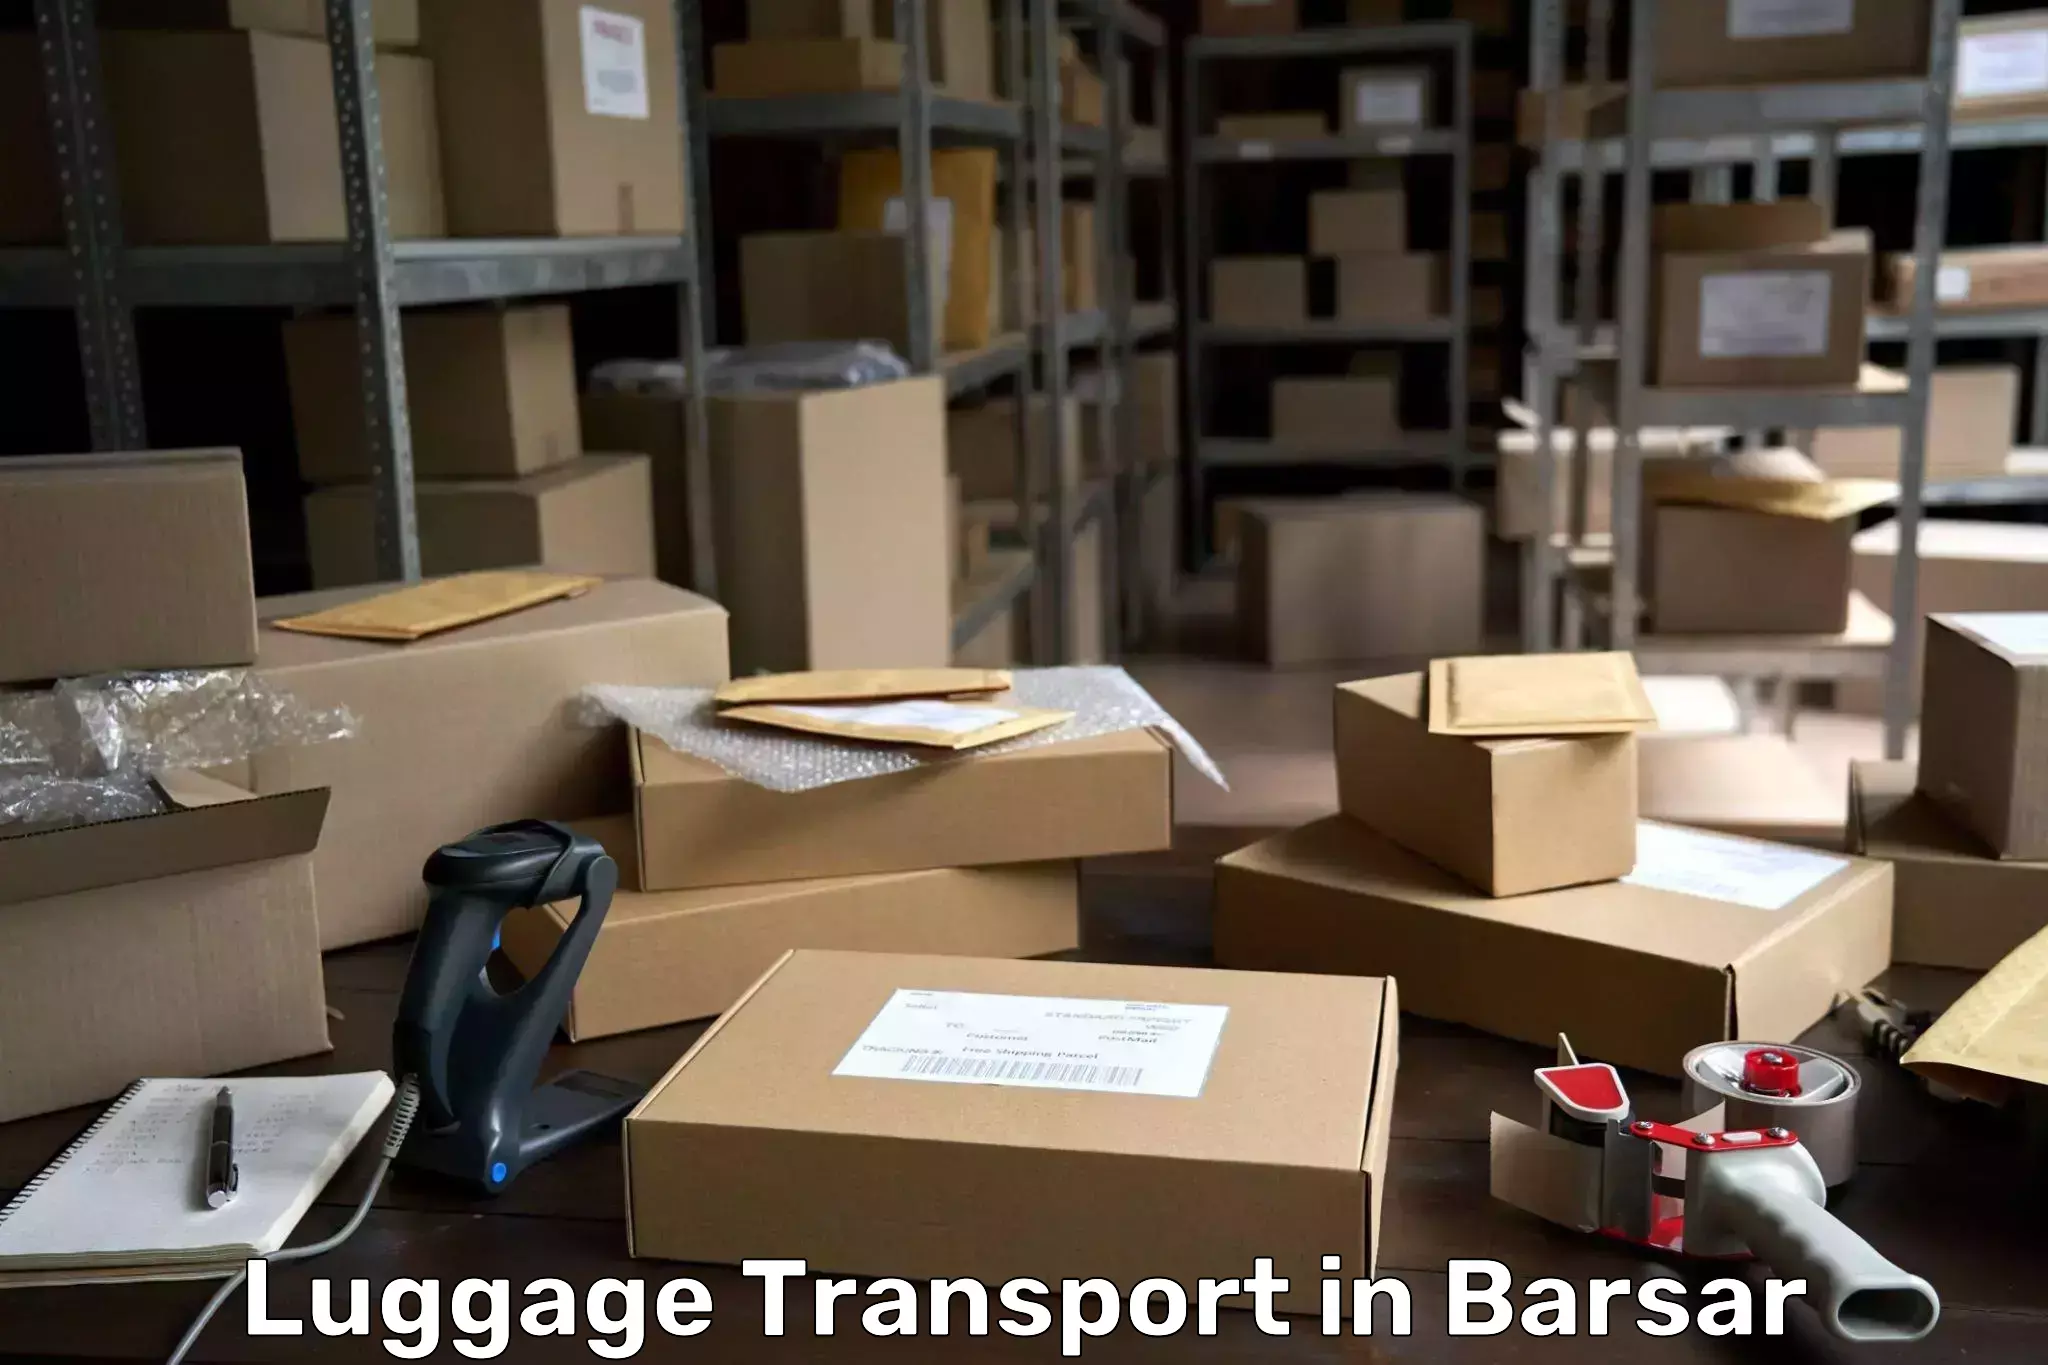 Luggage transport consultancy in Barsar